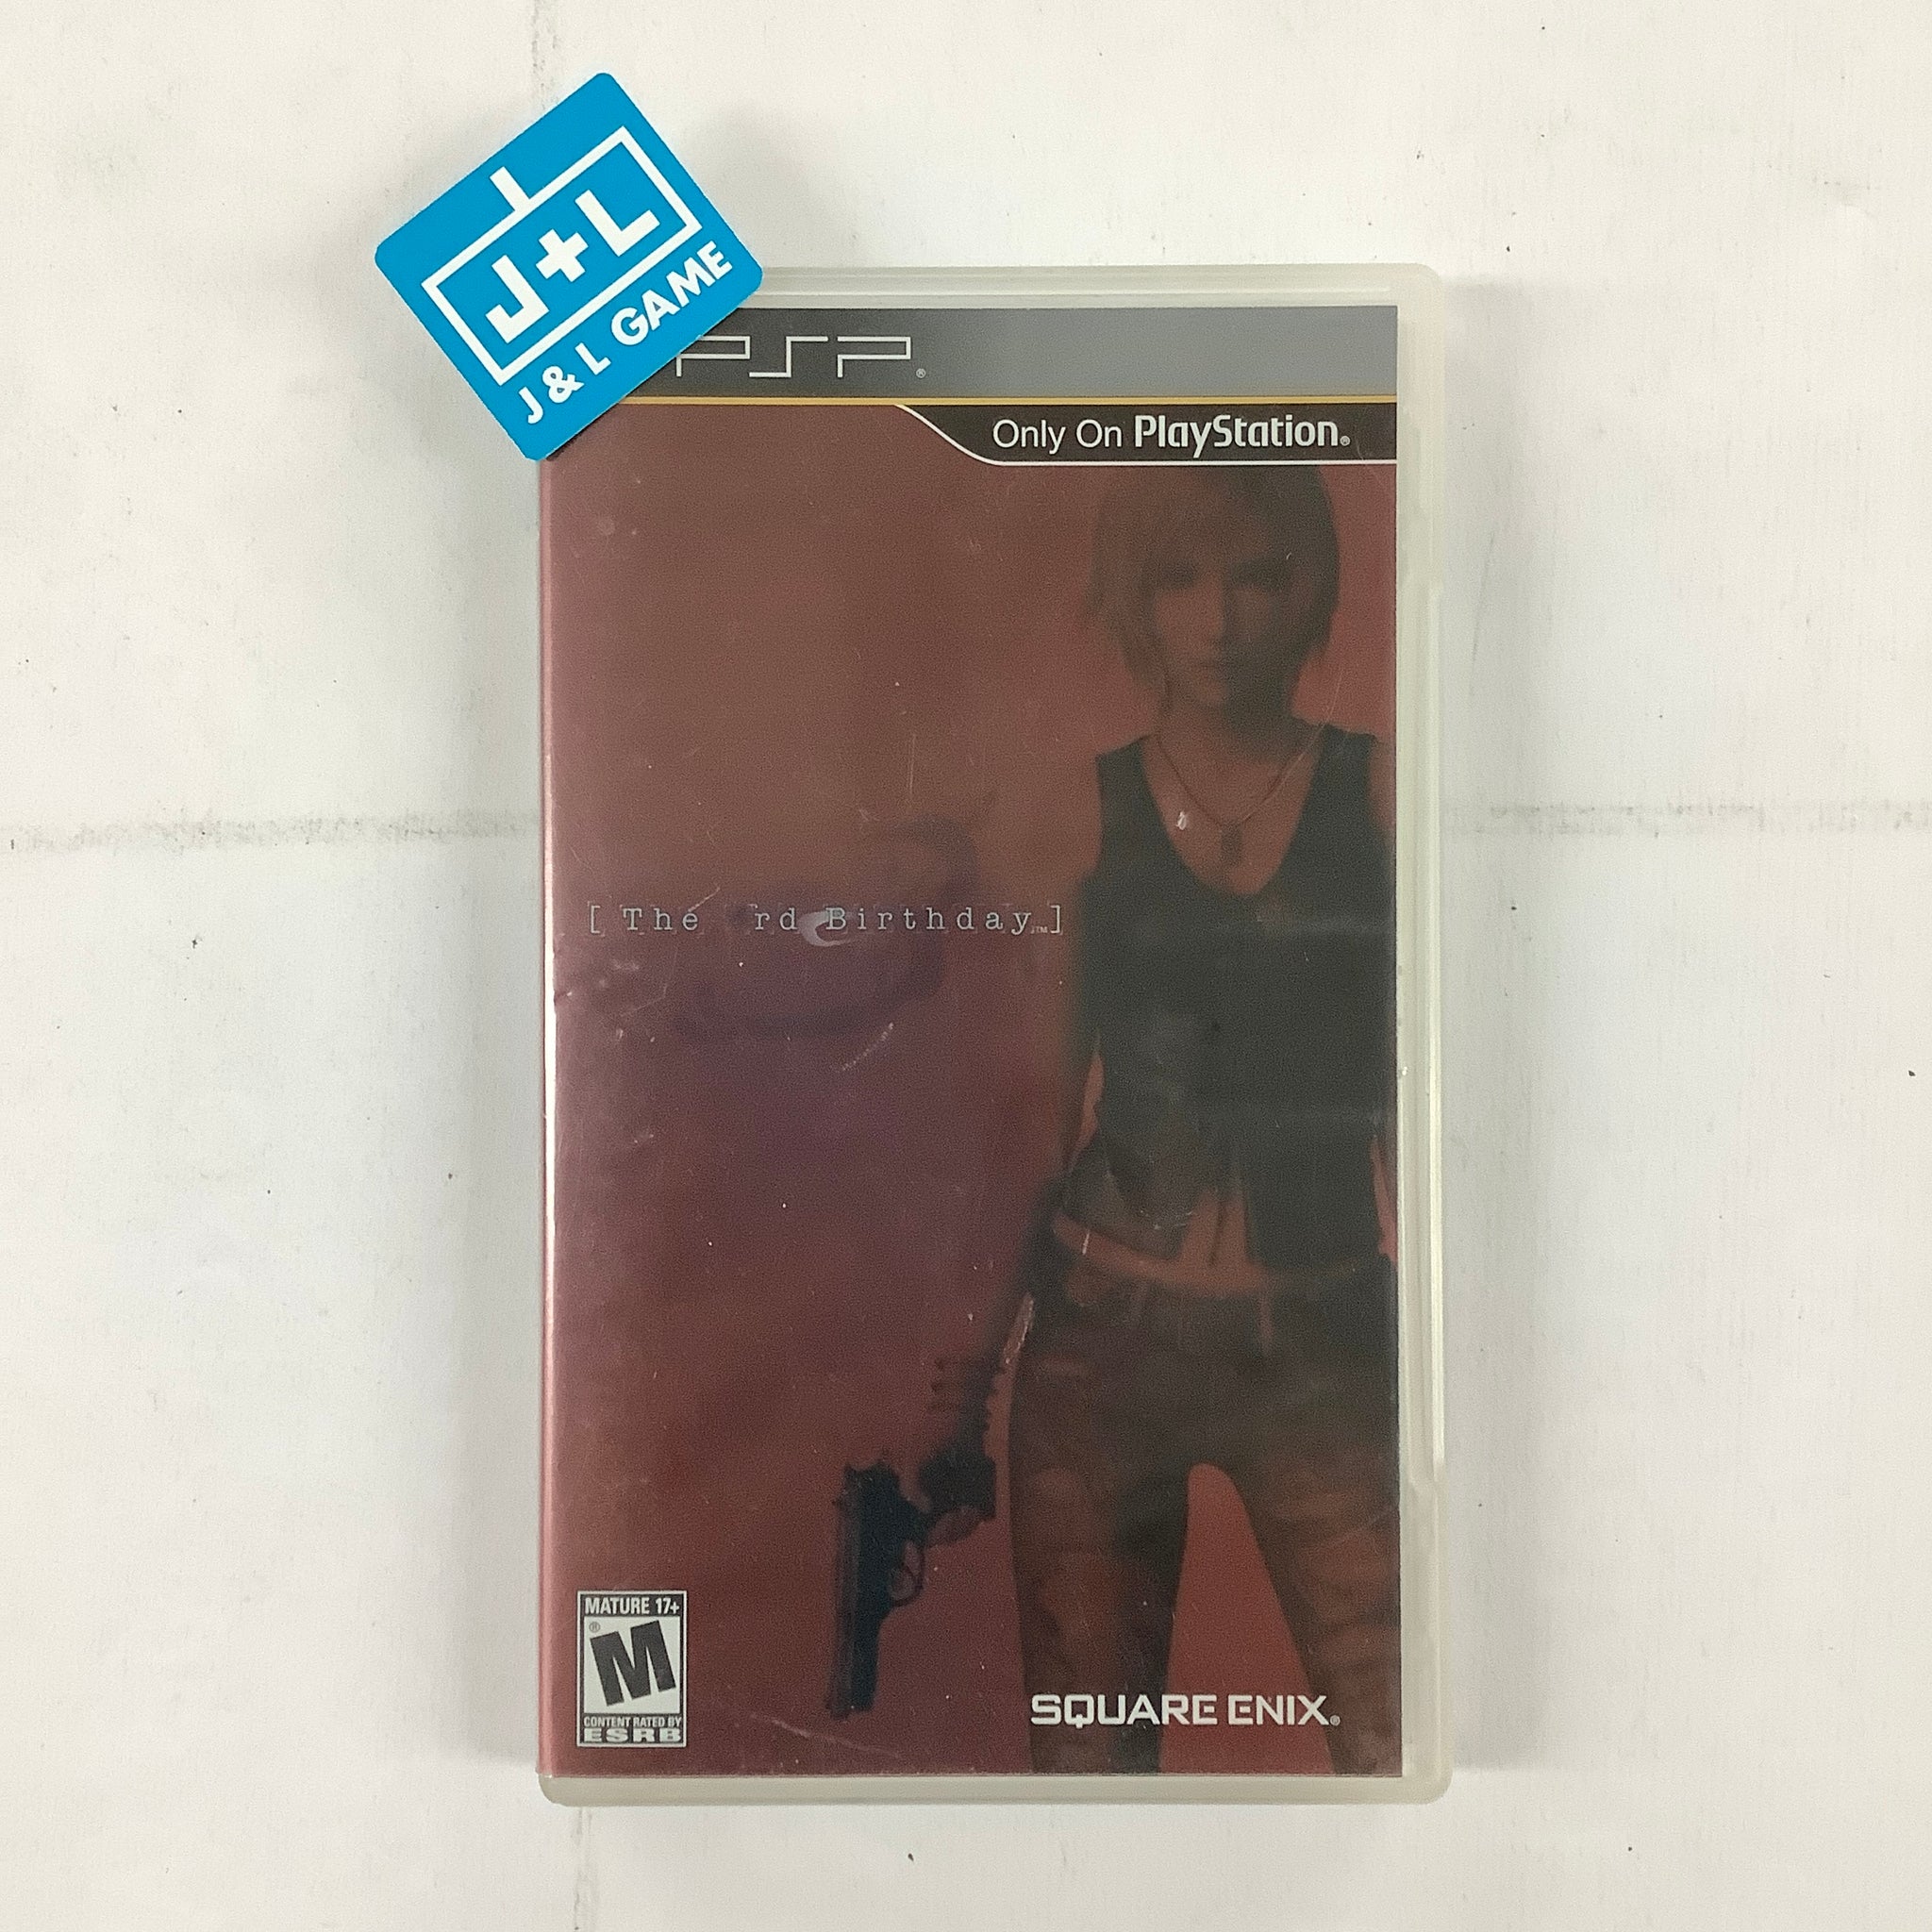  Parasite Eve II [Japan Import] : Video Games